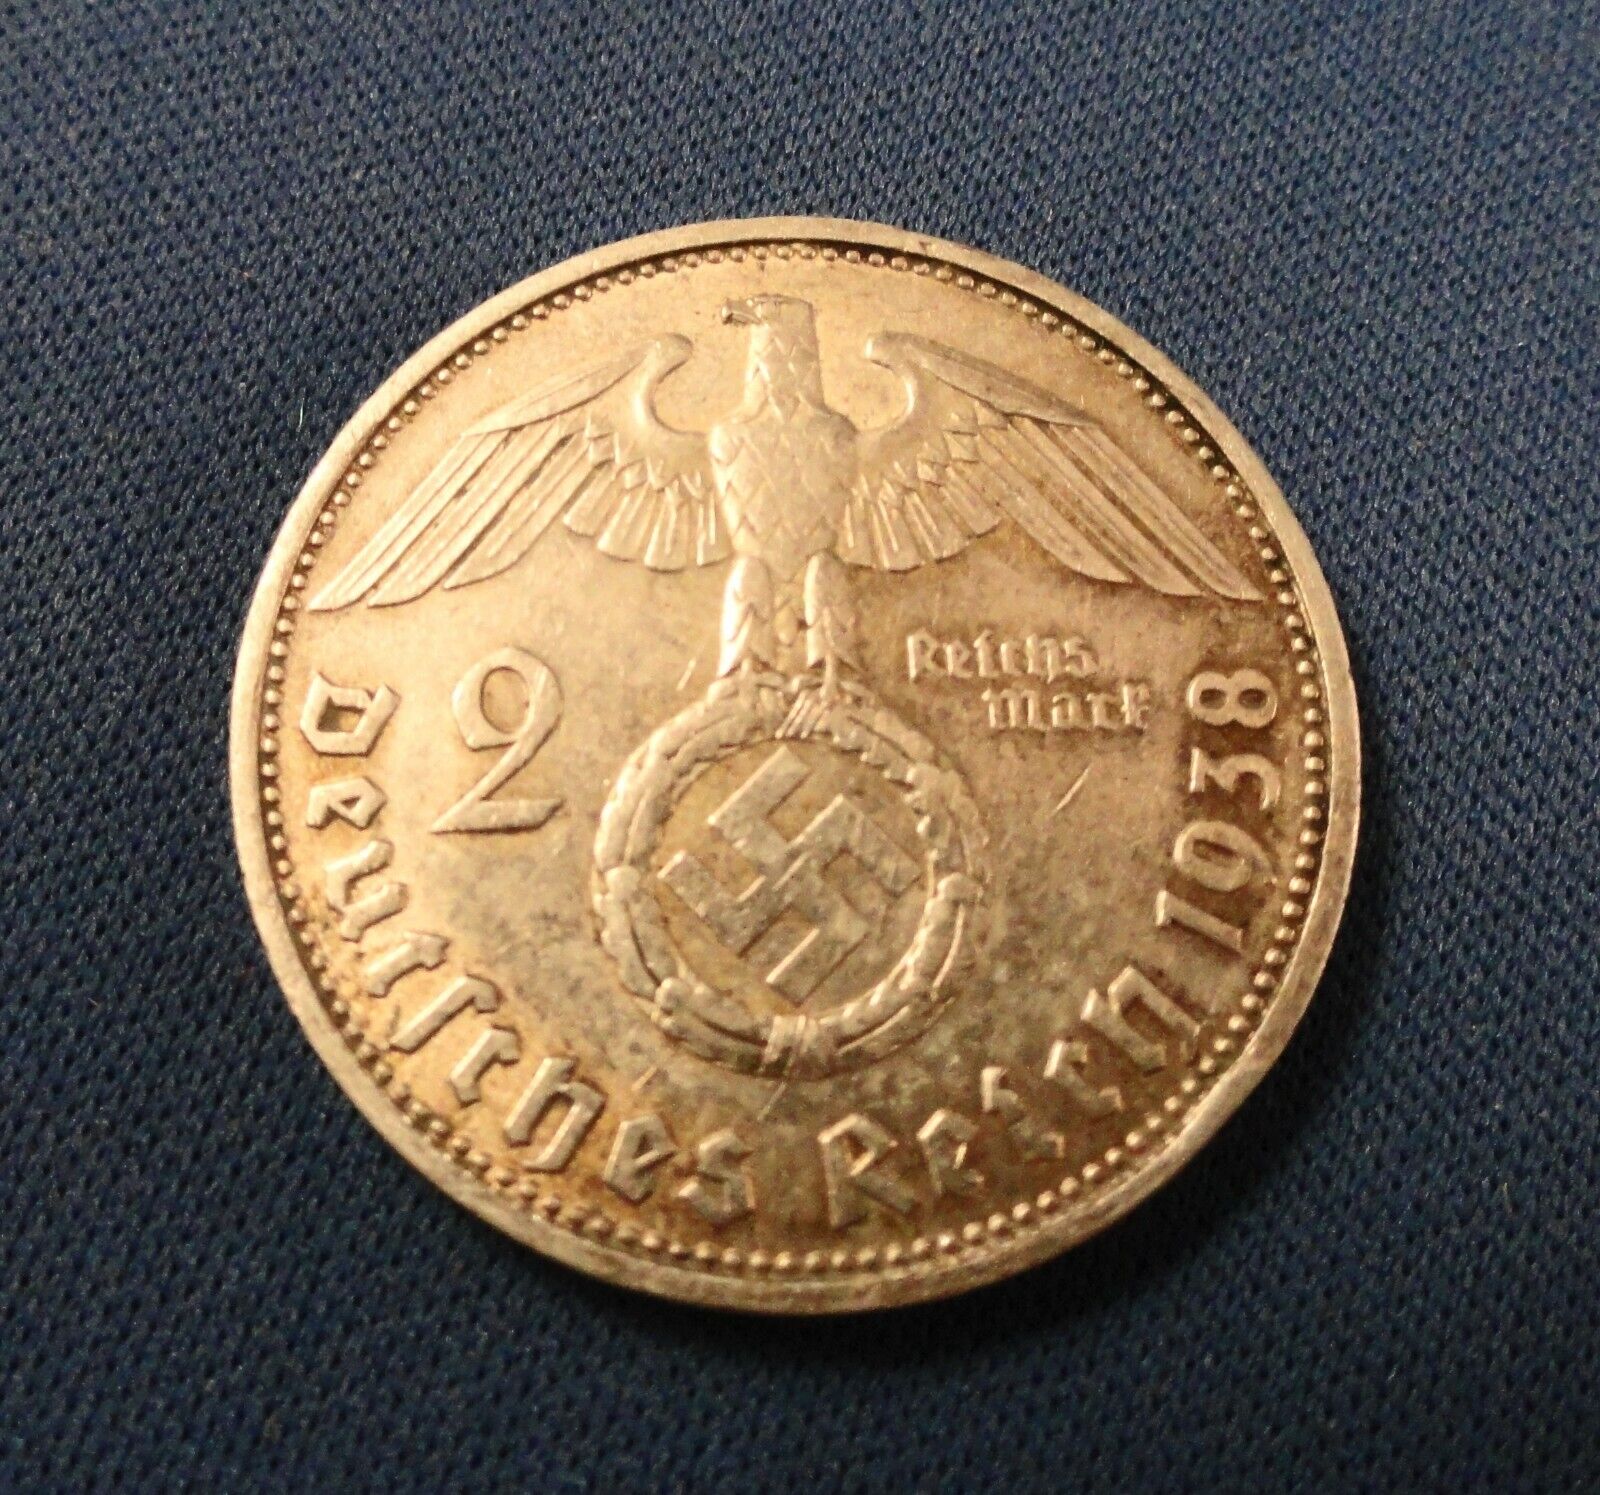 ONE: AU World War 2  German 2 Mark Silver Coin with Swastika  1936-39 dates